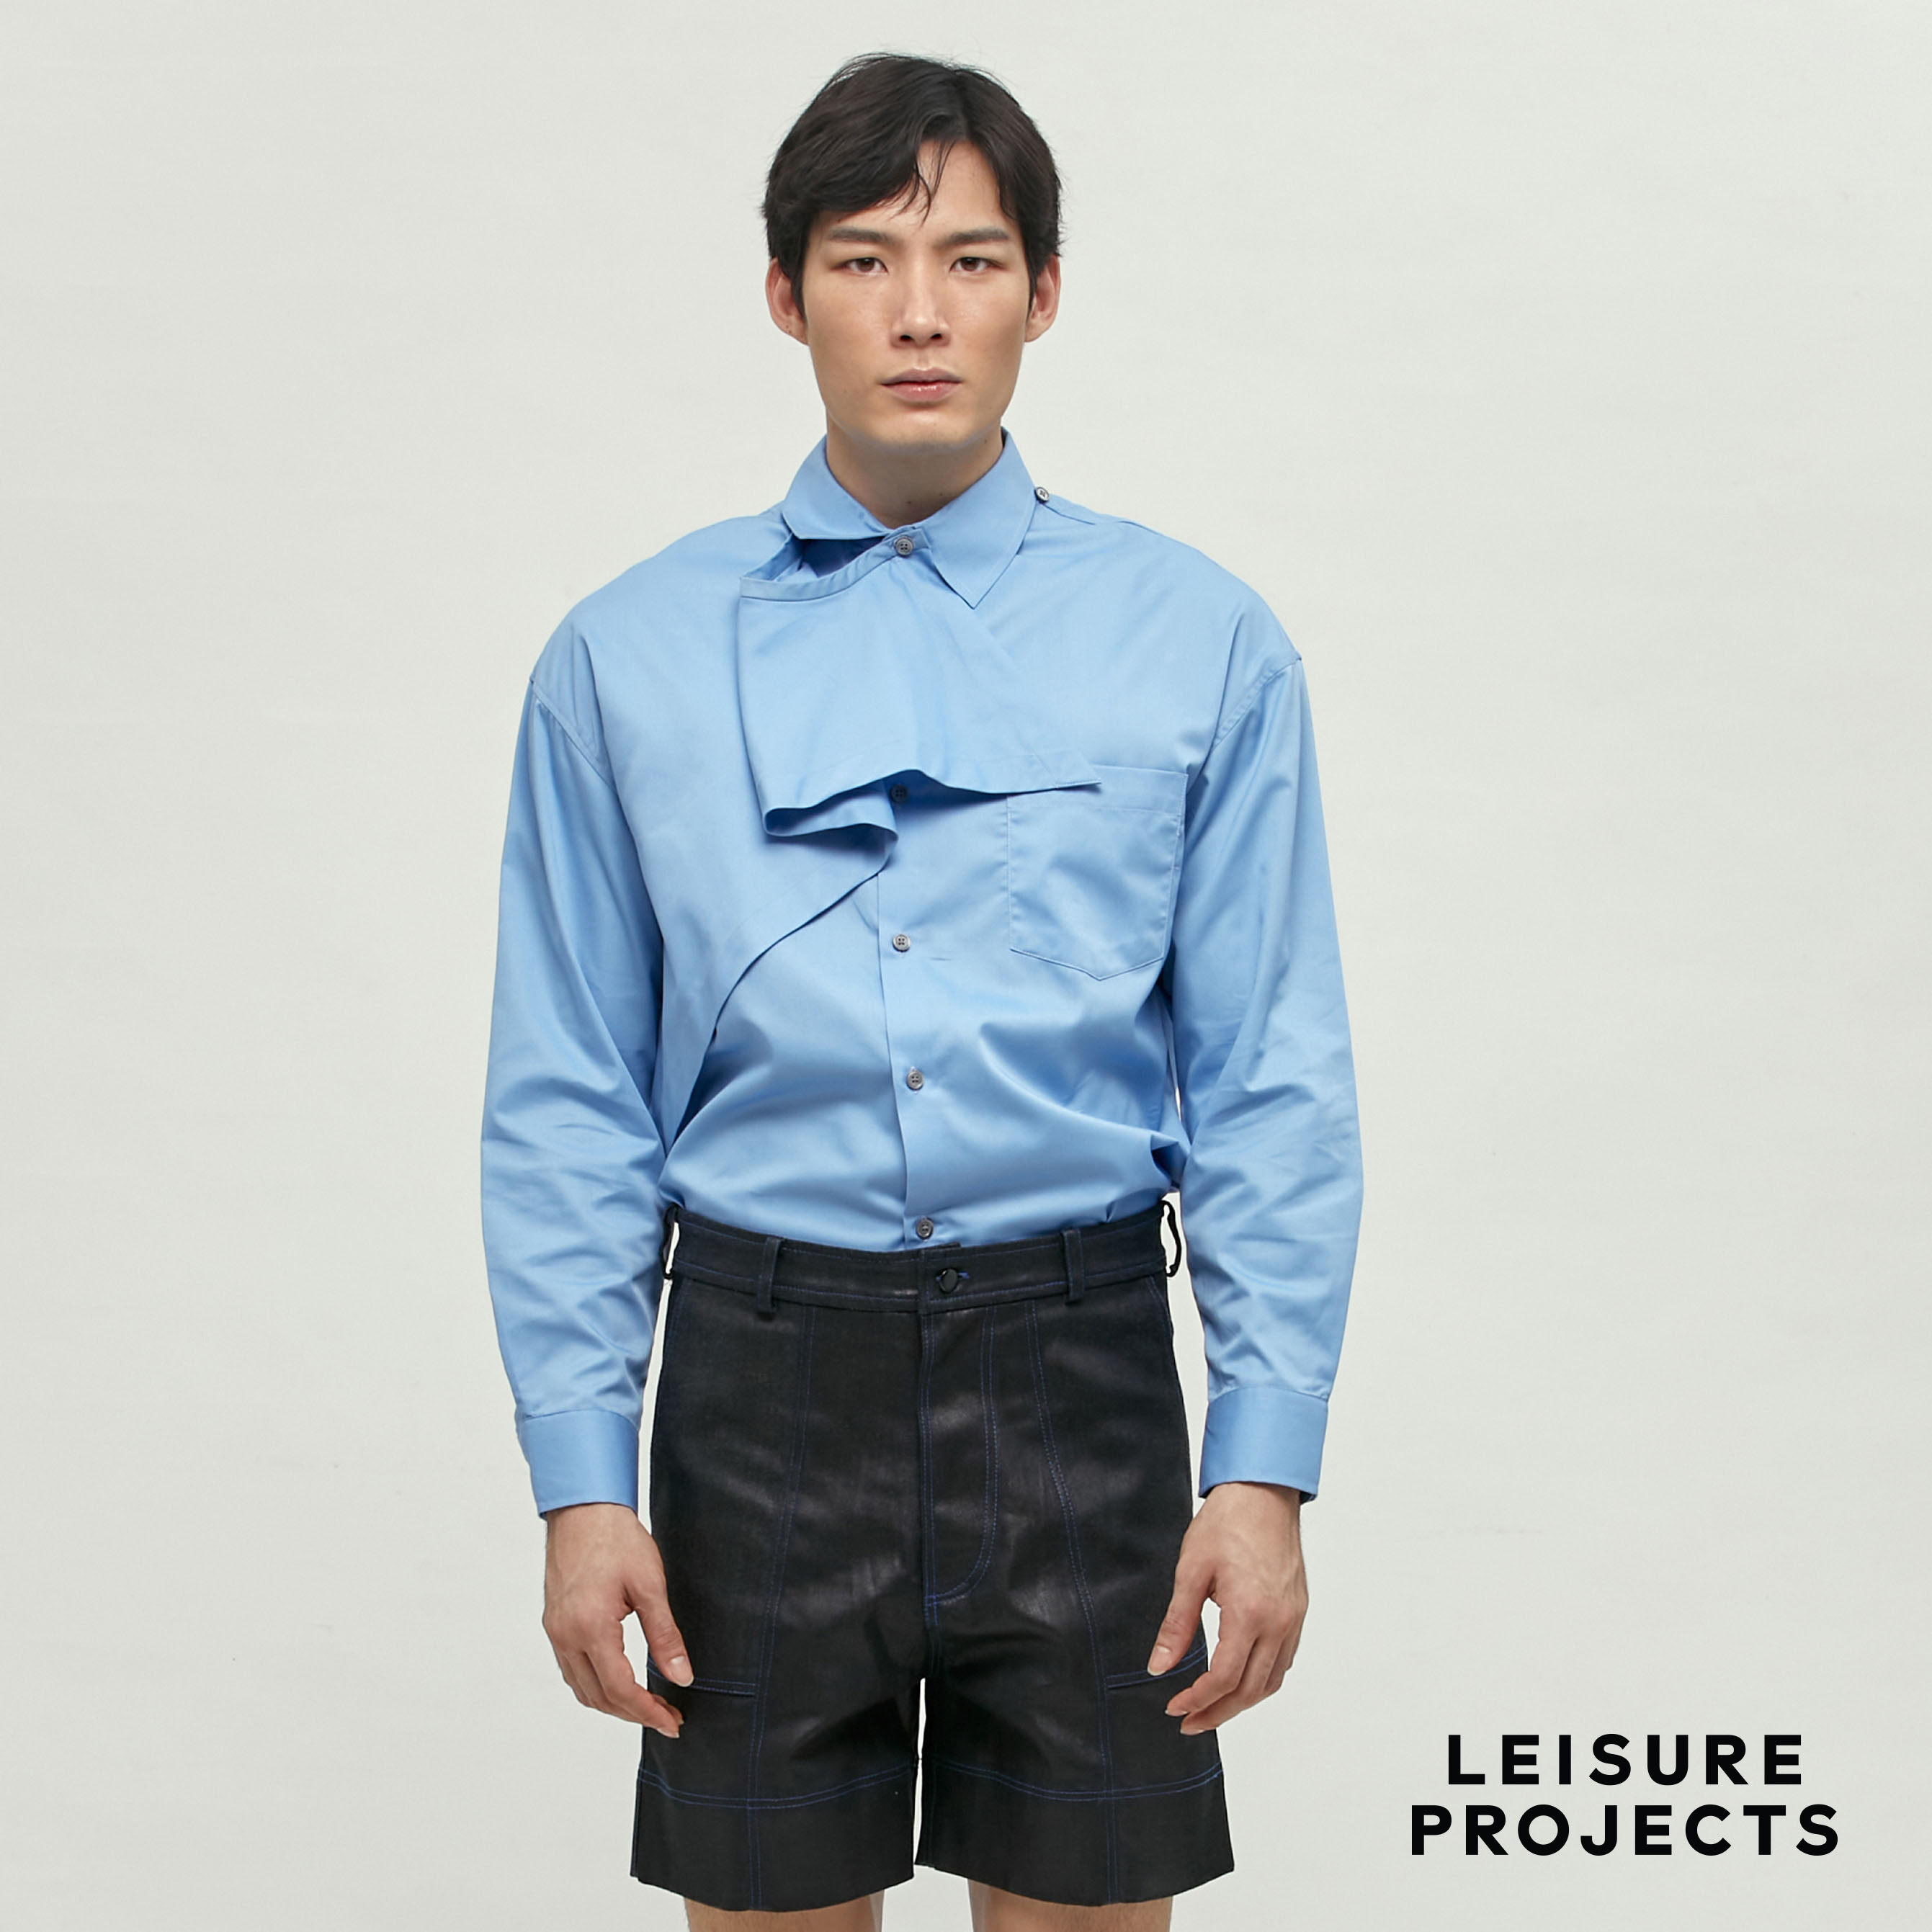 (LEISURE PROJECTS) workwear shorts กางเกงขาสั้น LEISURE PROJECTS ผ้า light denim ดีเทล เย็บเส้นด้าย double stitching สีcontrast